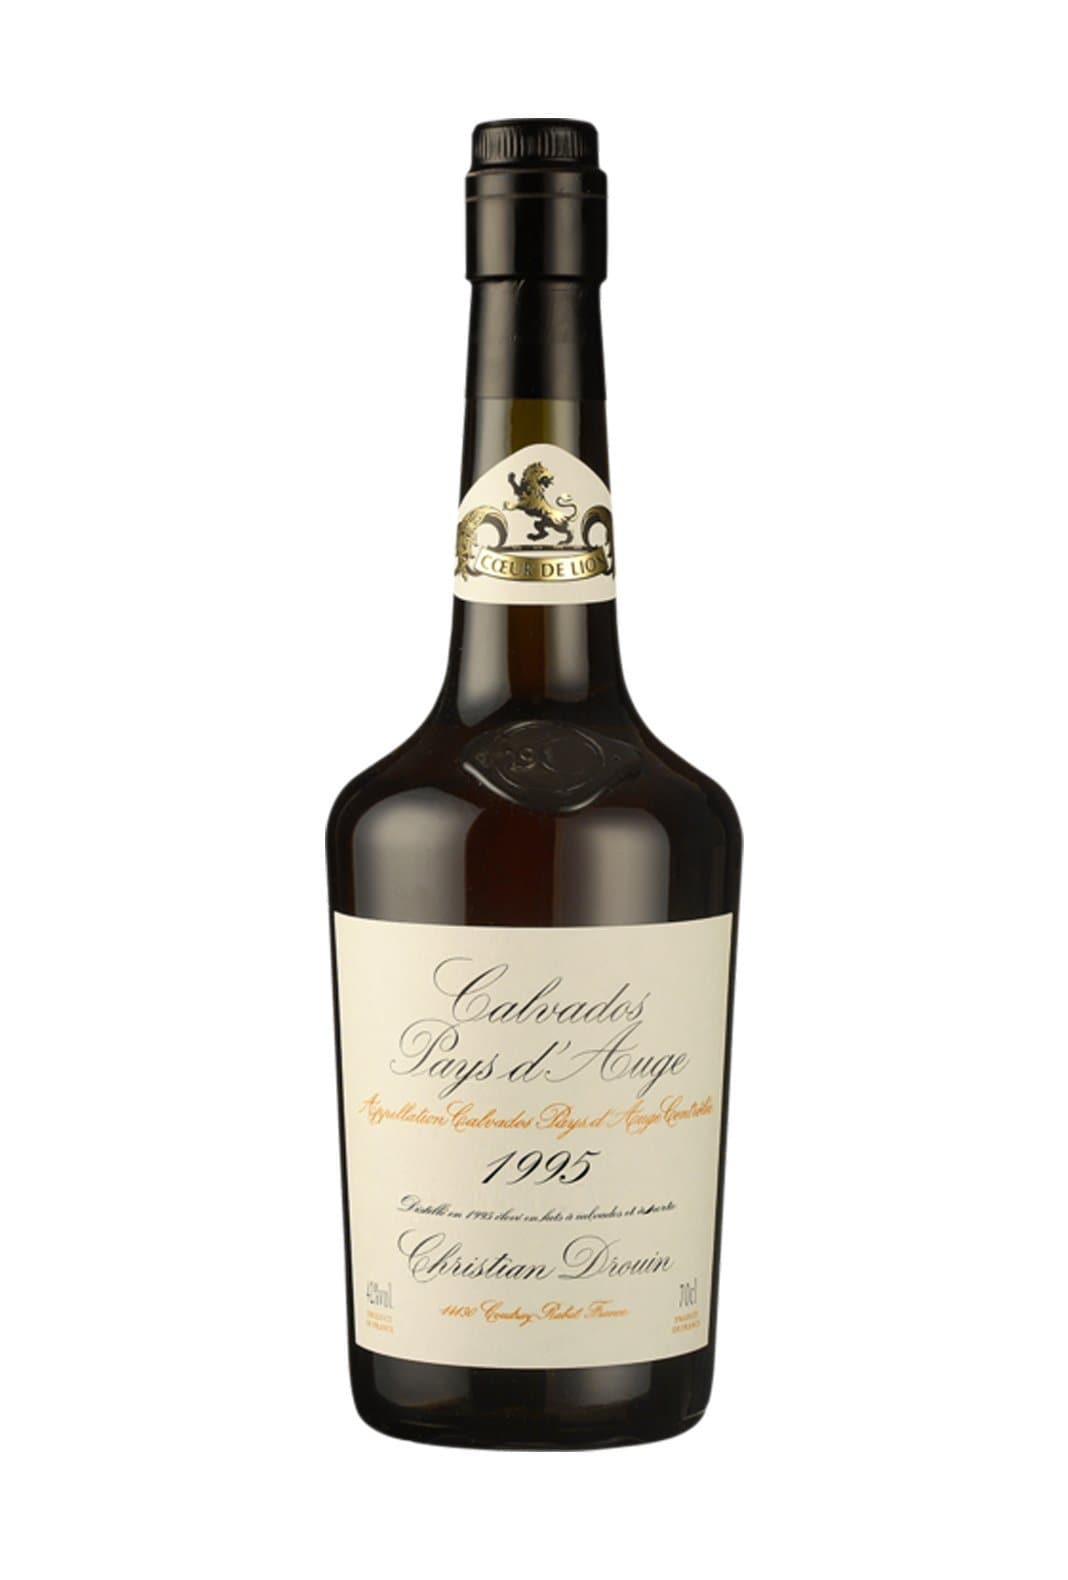 Christian Drouin Calvados 1995 Pays D'Auge Port Cask 42% 700ml | Brandy | Shop online at Spirits of France